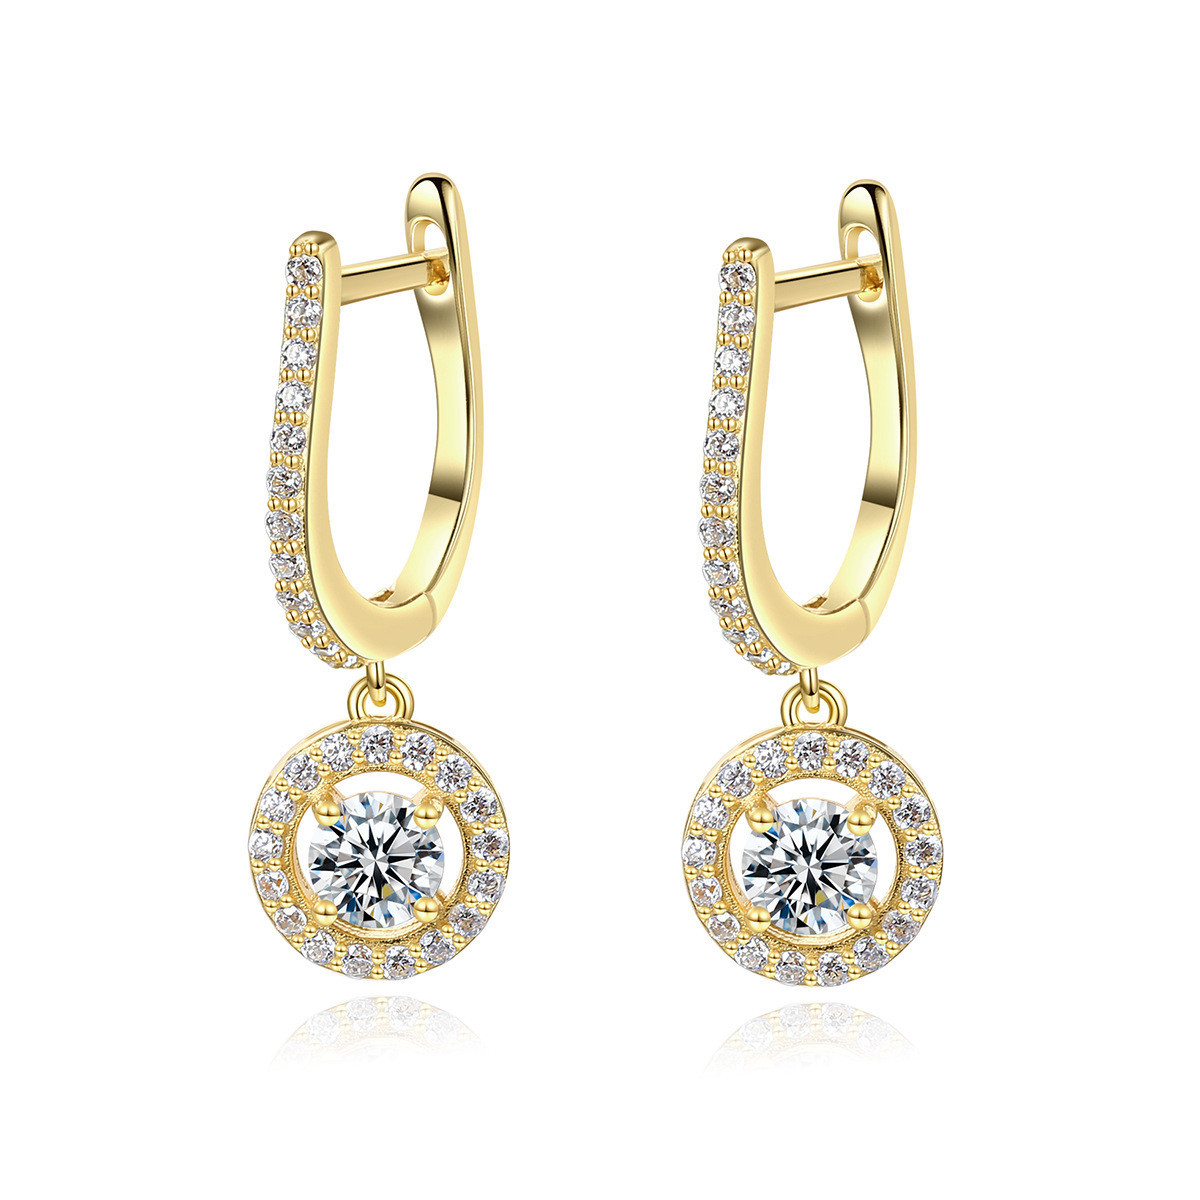 Allentian - 18k gold plated s925 silver earrings 1 carat moissanite earring